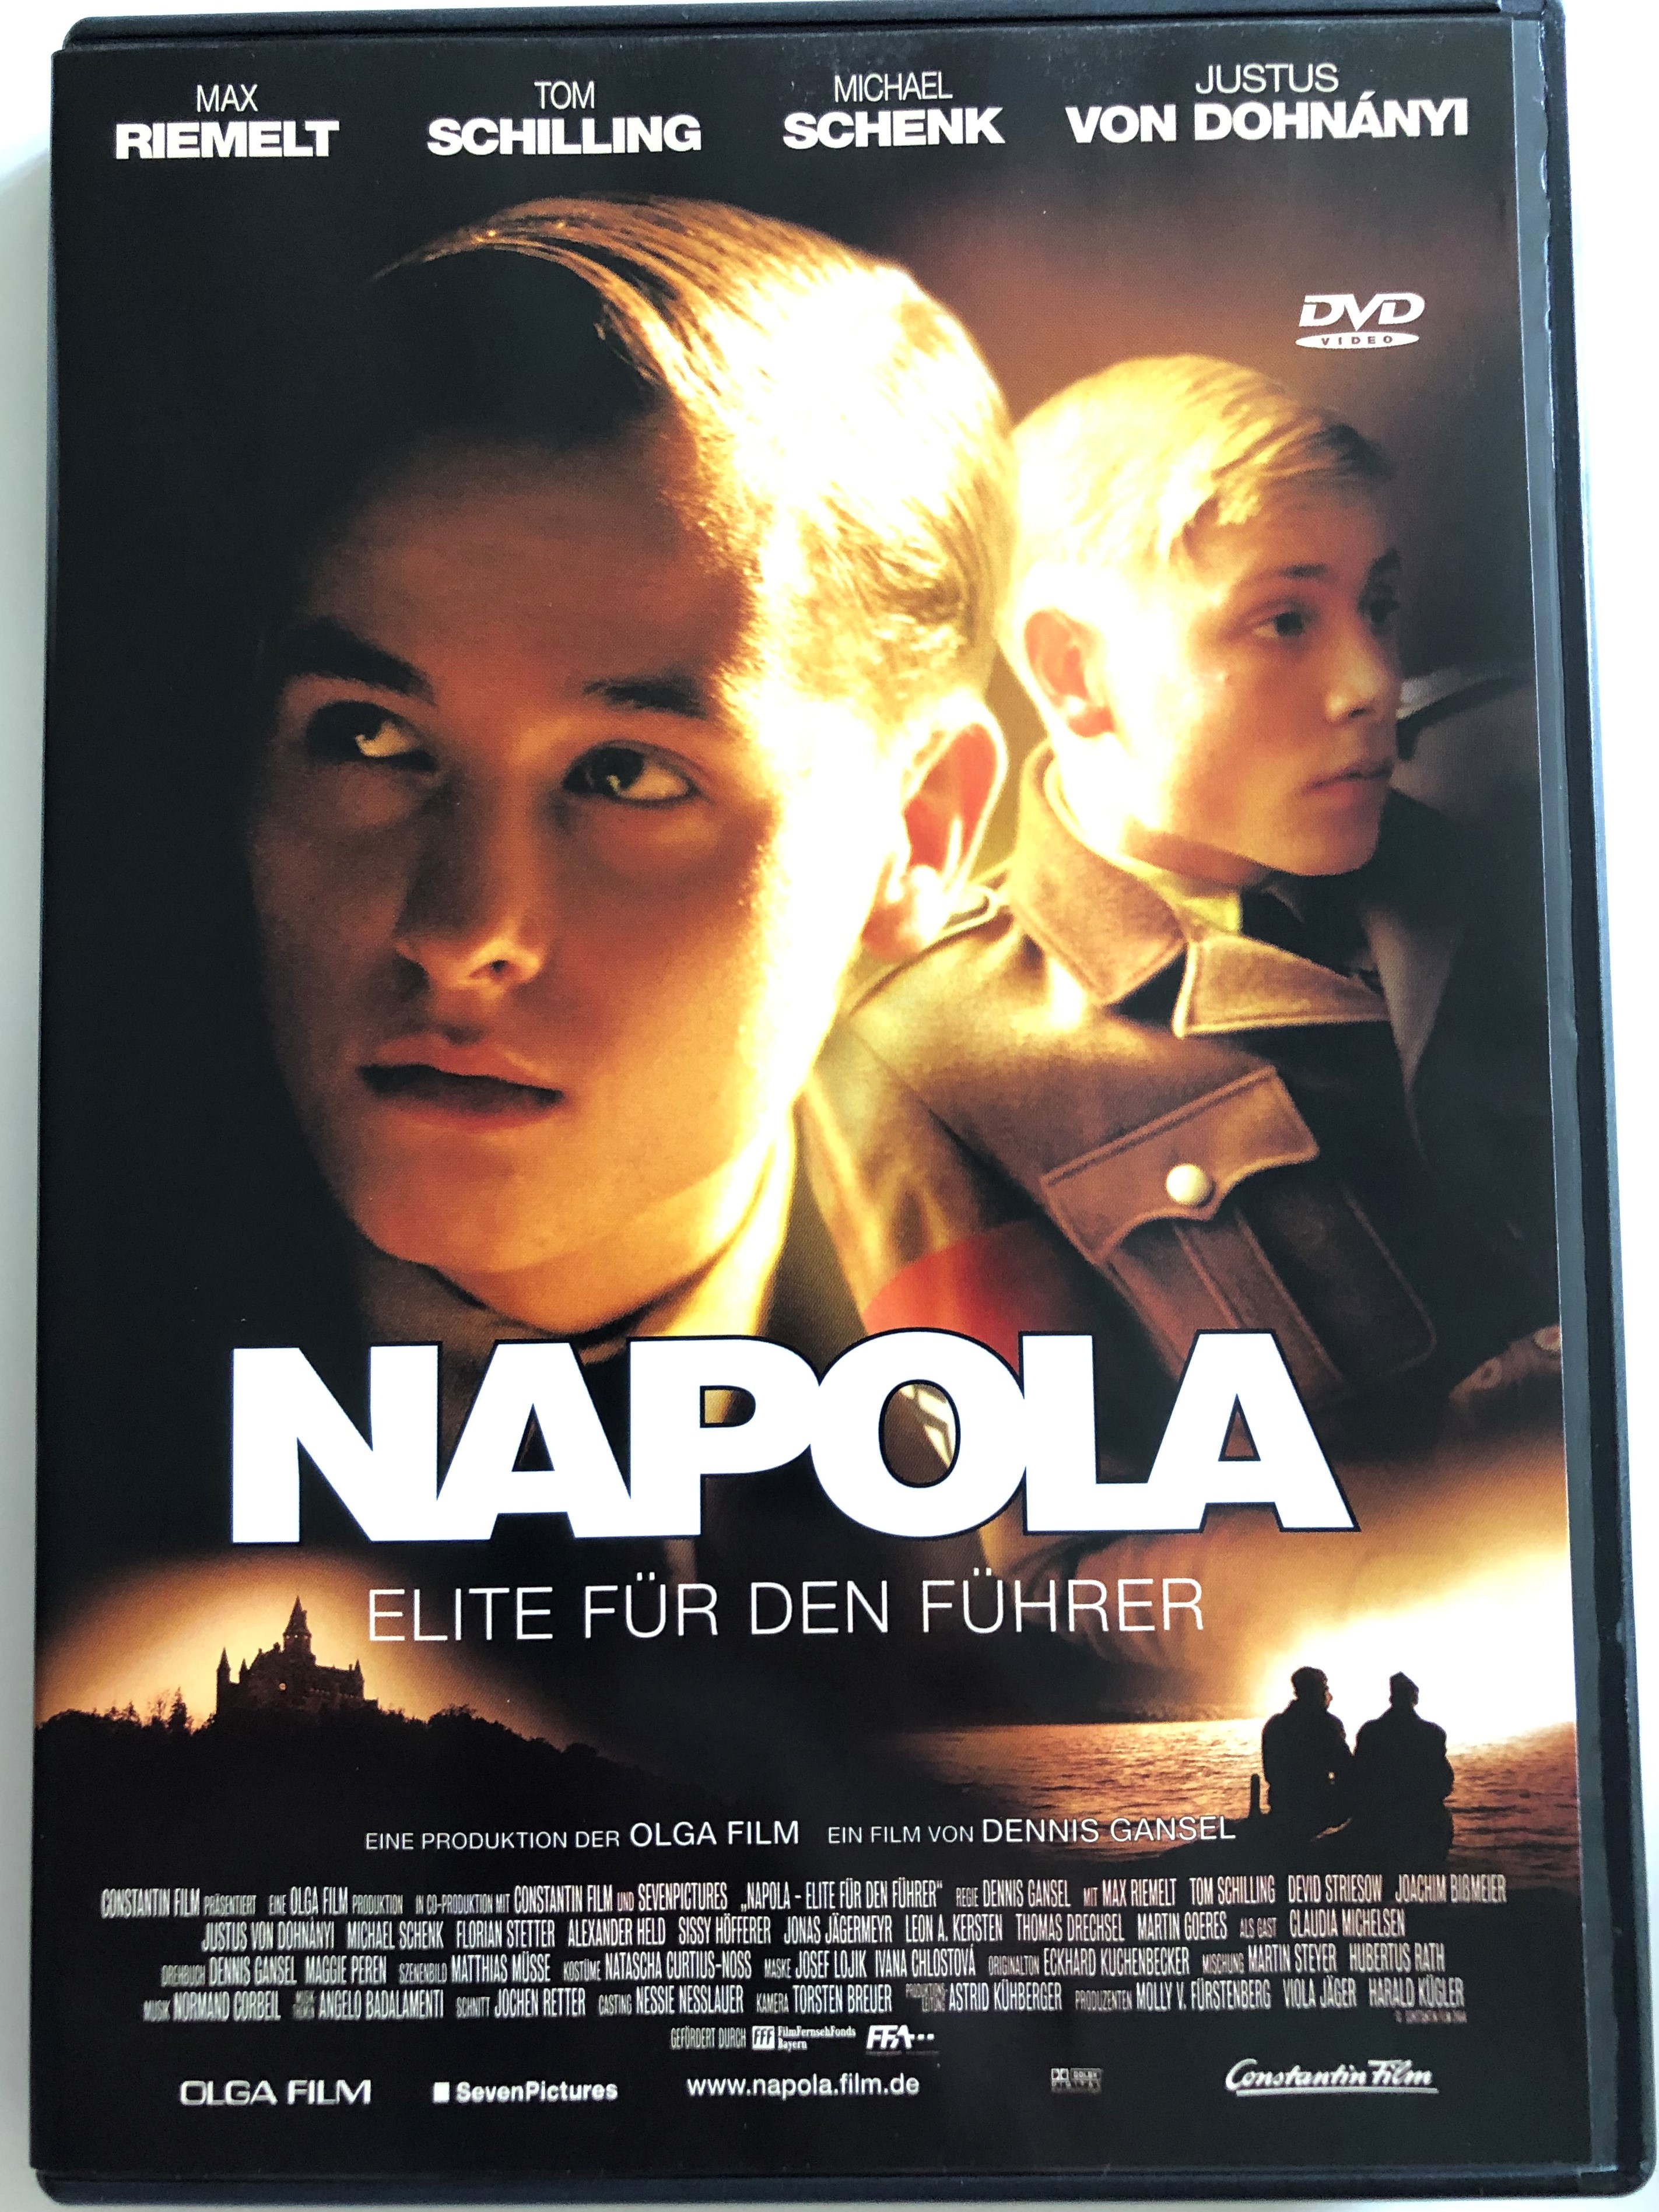 napola-elite-f-r-den-f-hrer-dvd-2004-before-the-fall-directed-by-dennis-gansel-starring-max-riemelt-tom-schilling-michael-schenk-justus-von-dohn-nyi-1-.jpg